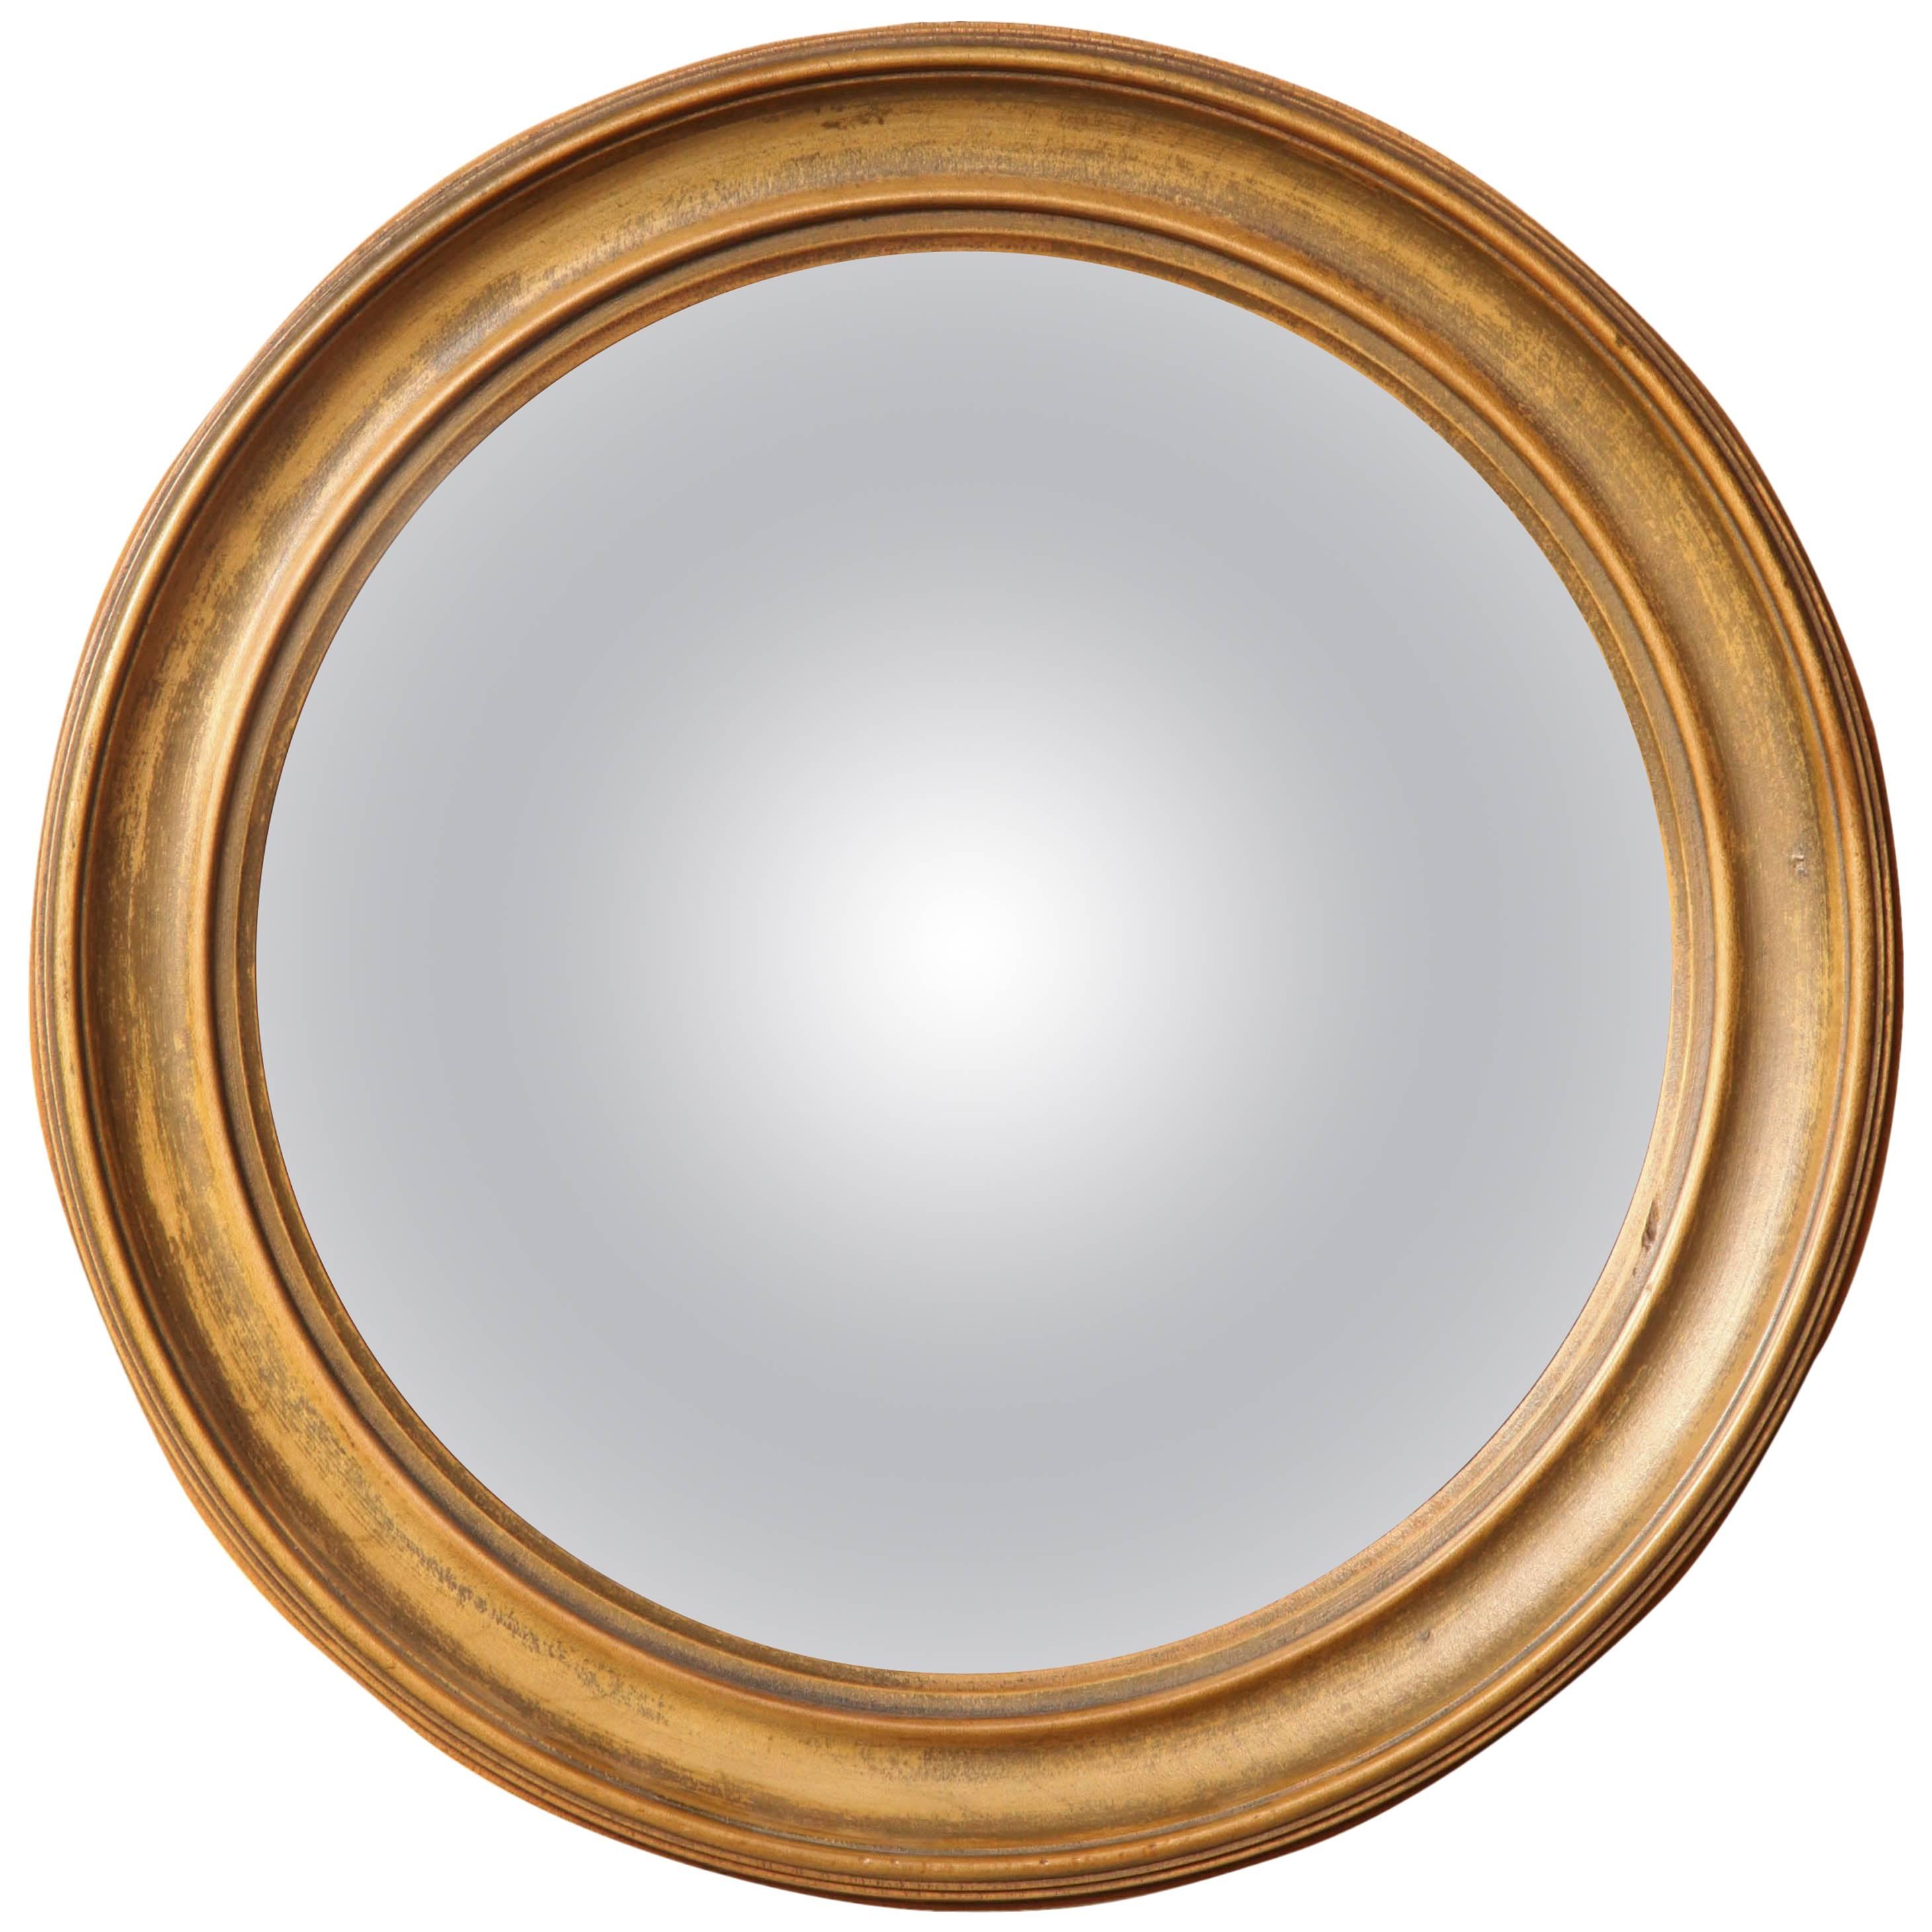 Late 19th Century English Convex Mirror